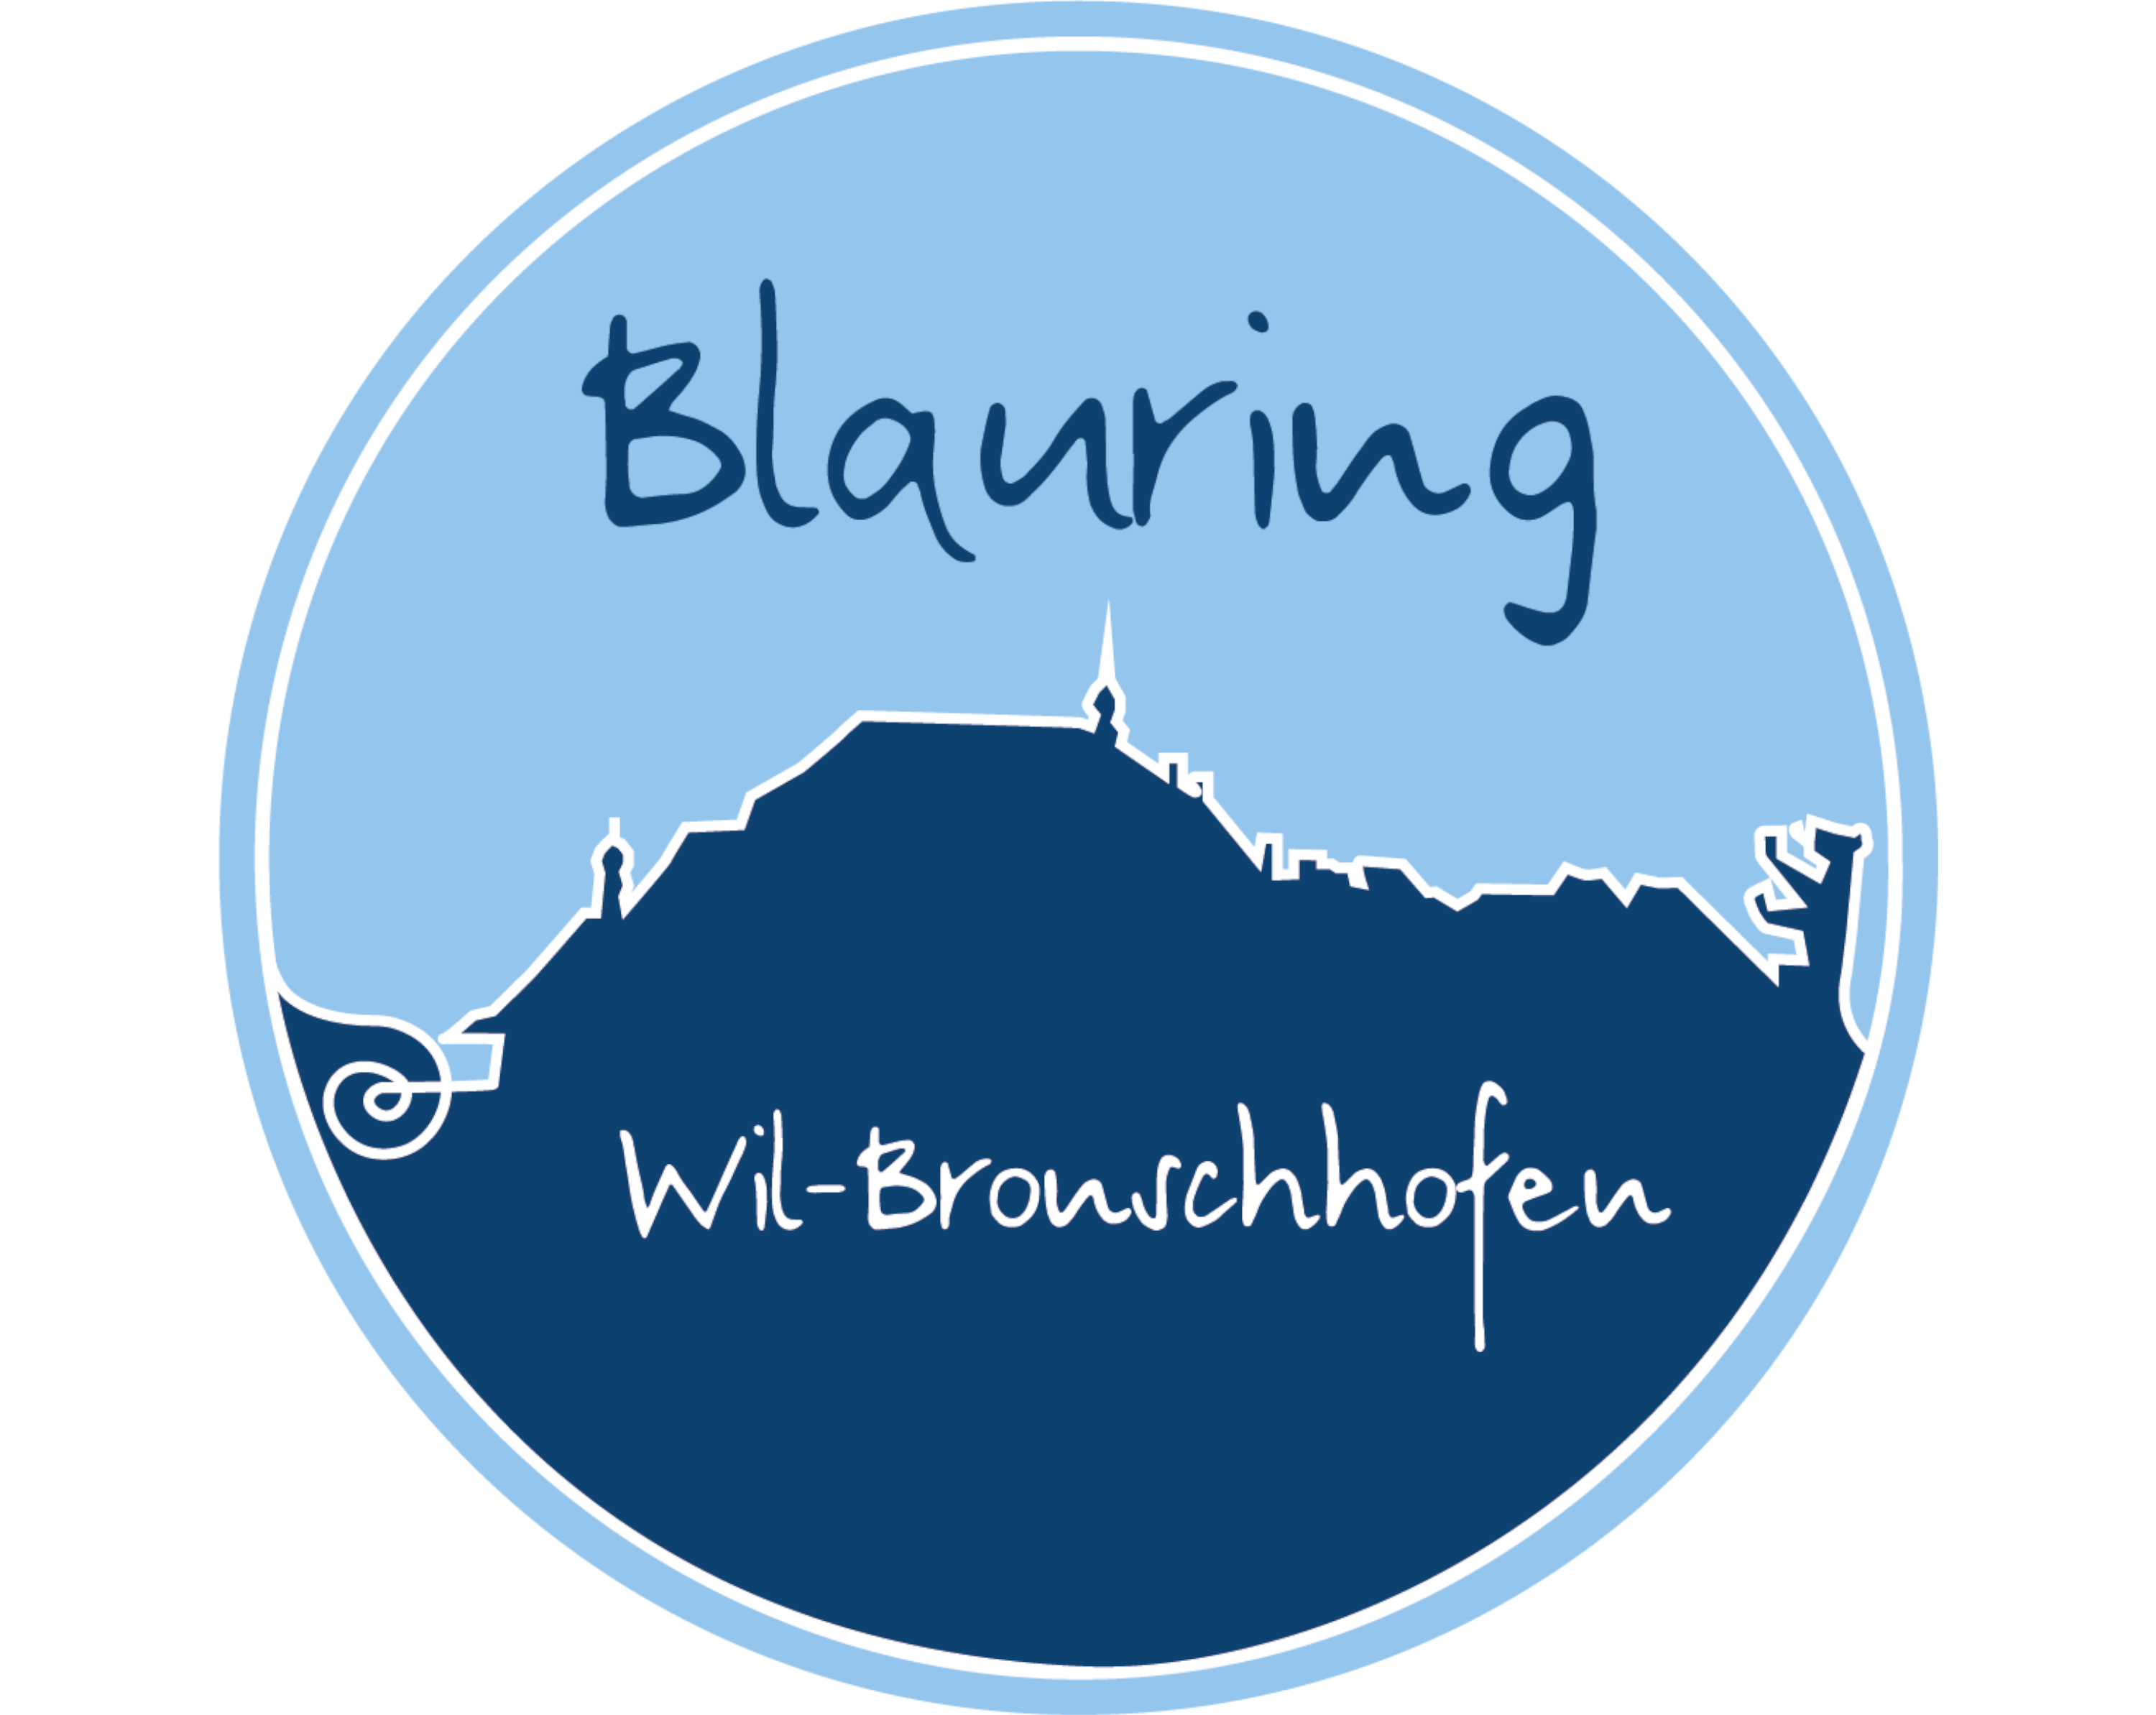 Blauring Wil-Bronschhofen